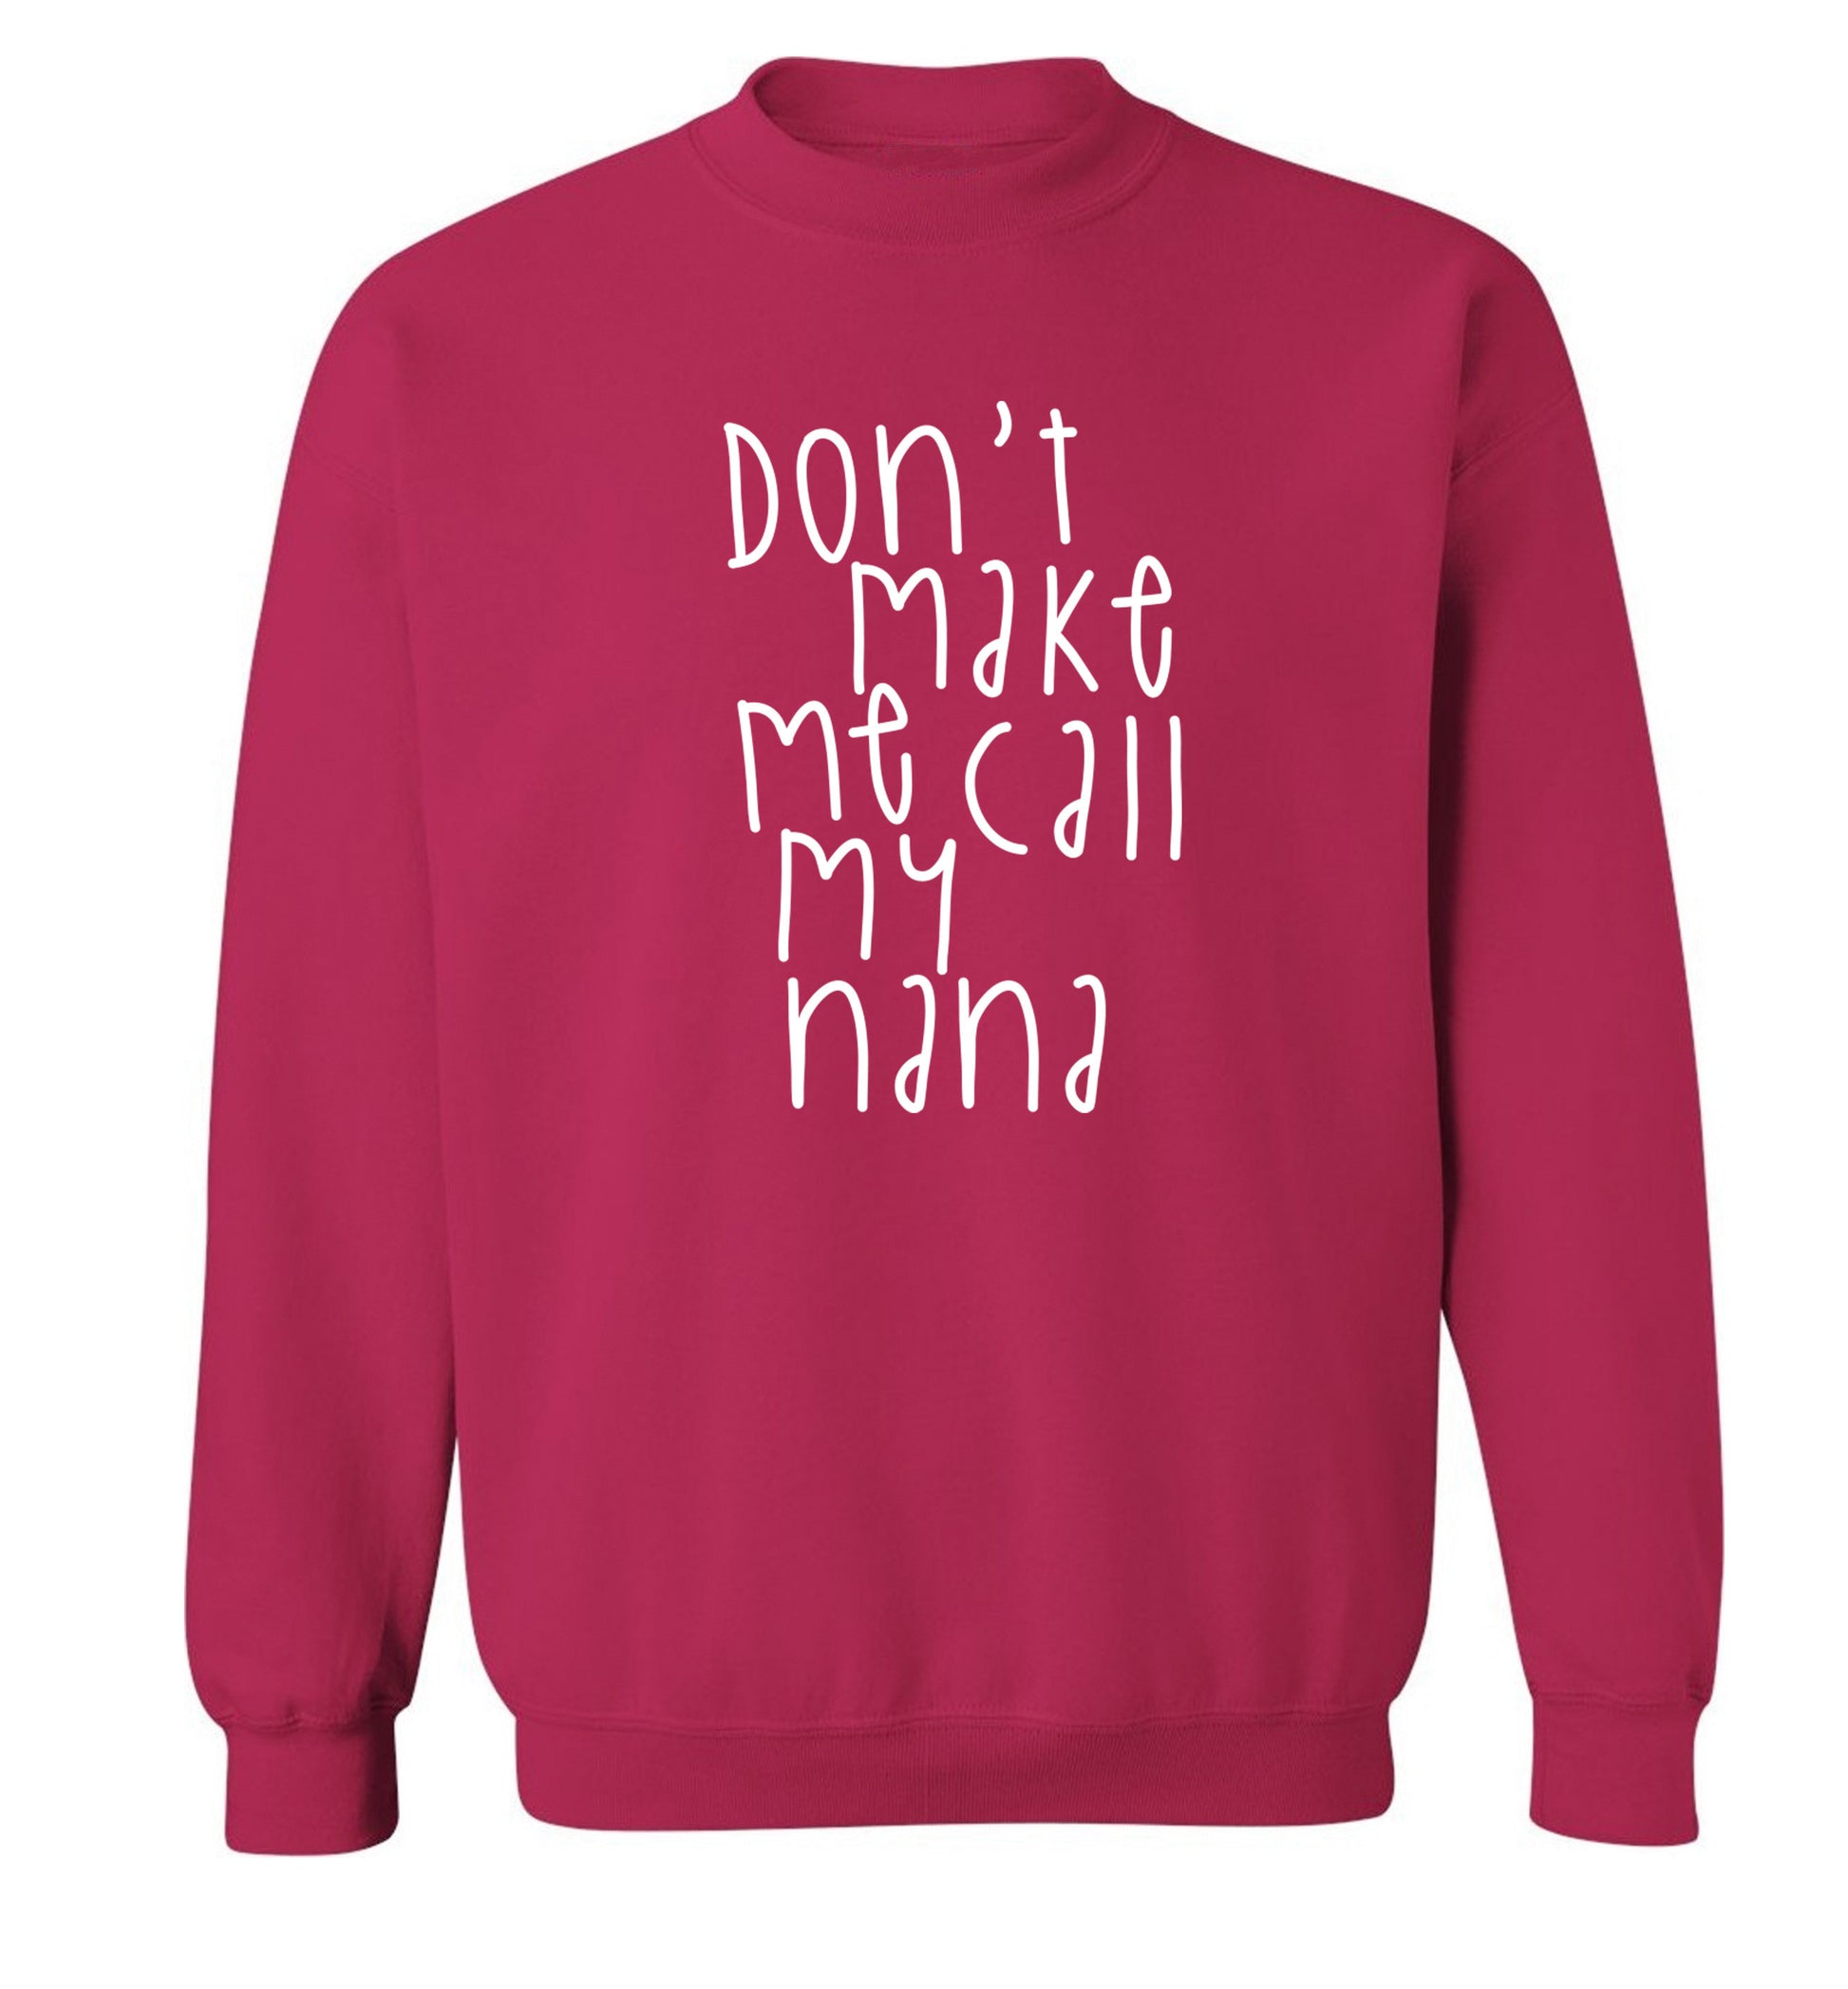 Don't make me call my nana Adult's unisex pink Sweater 2XL